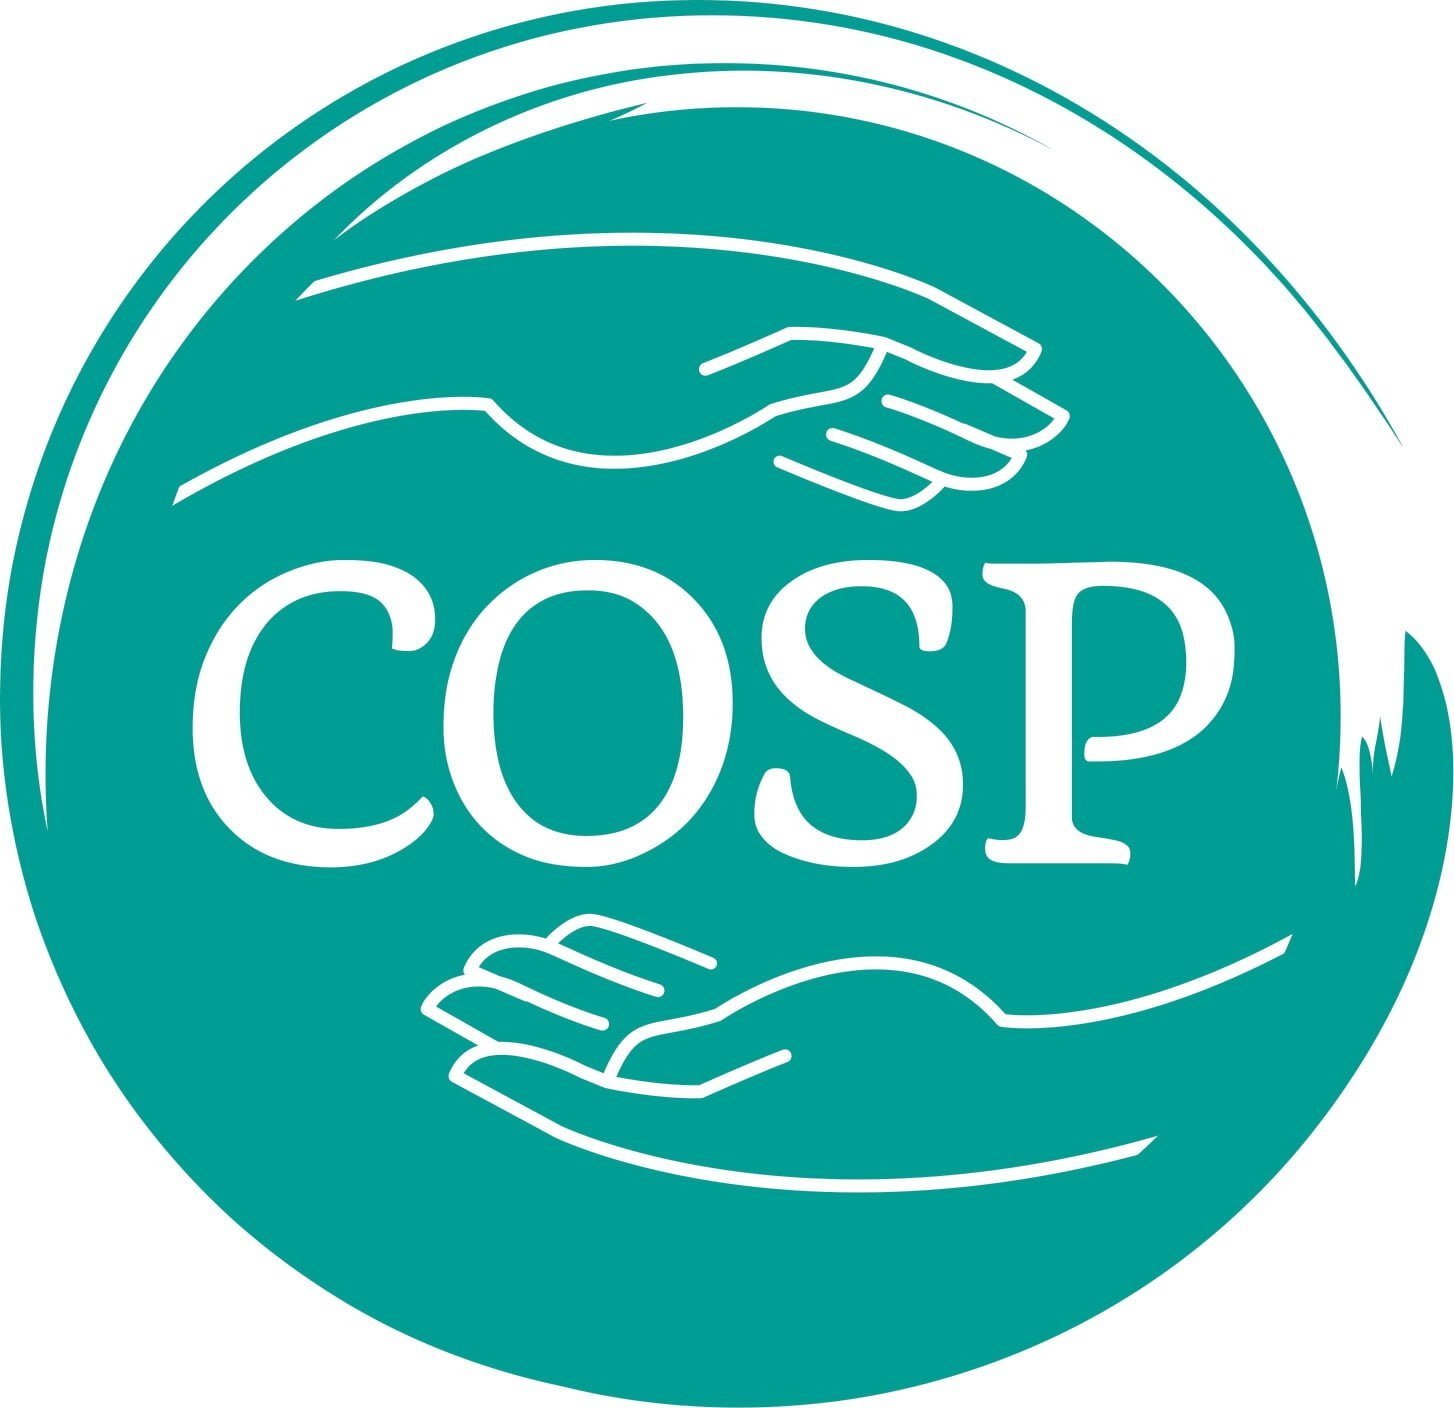 COSP_logo_closed_green%2B%282%29.jpg